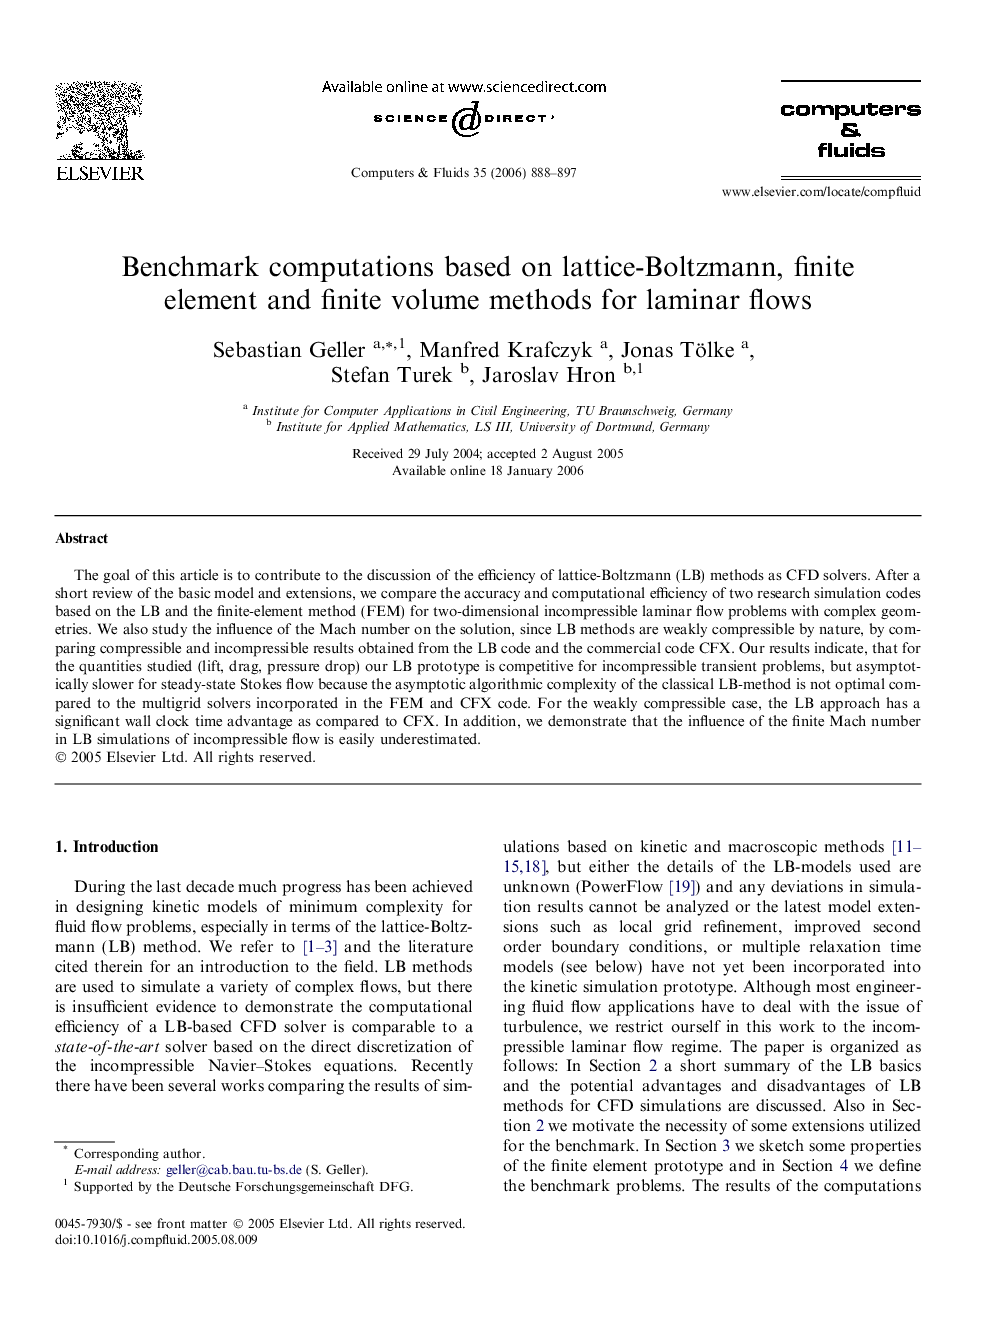 Benchmark computations based on lattice-Boltzmann, finite element and finite volume methods for laminar flows